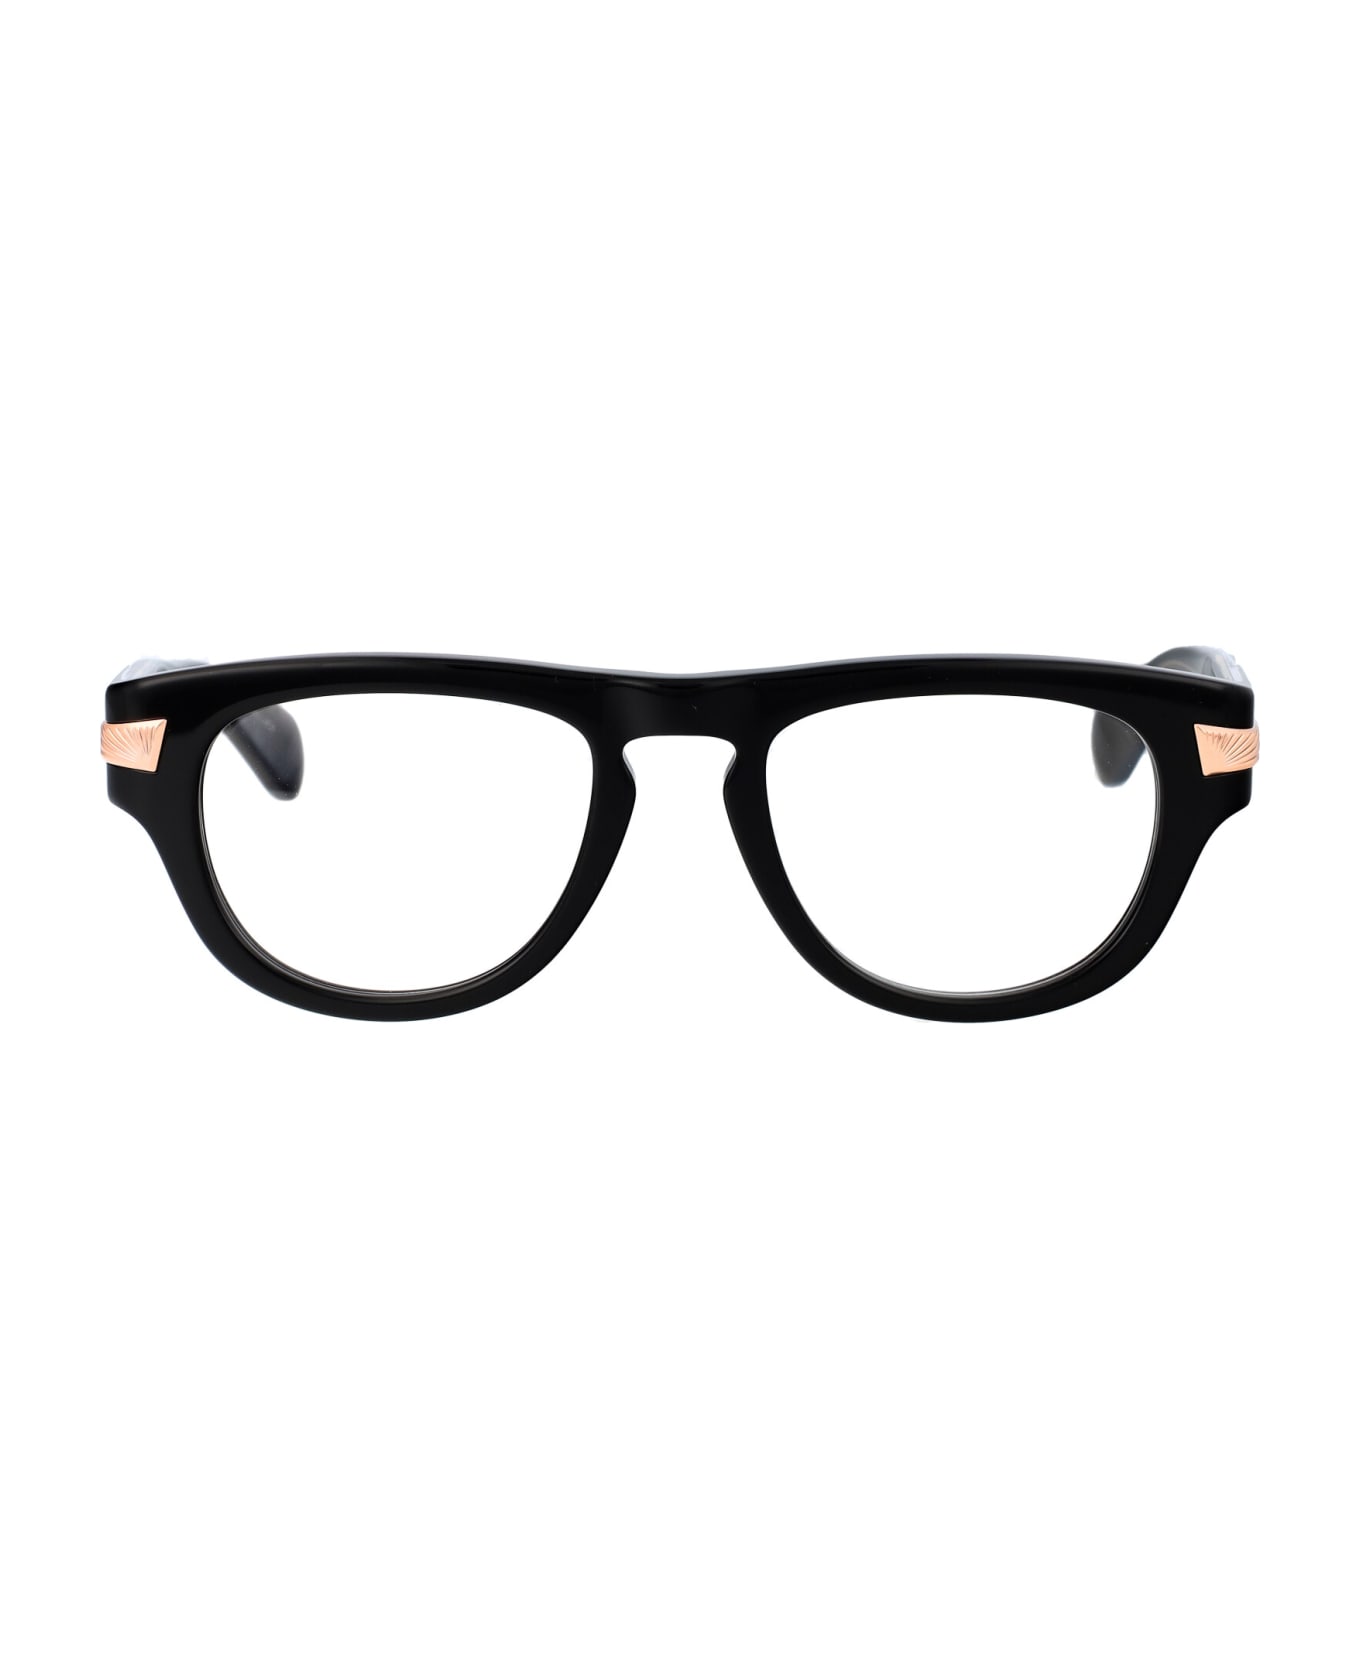 Gucci Eyewear Gg1519o Glasses - 001 BLACK BLACK TRANSPARENT アイウェア